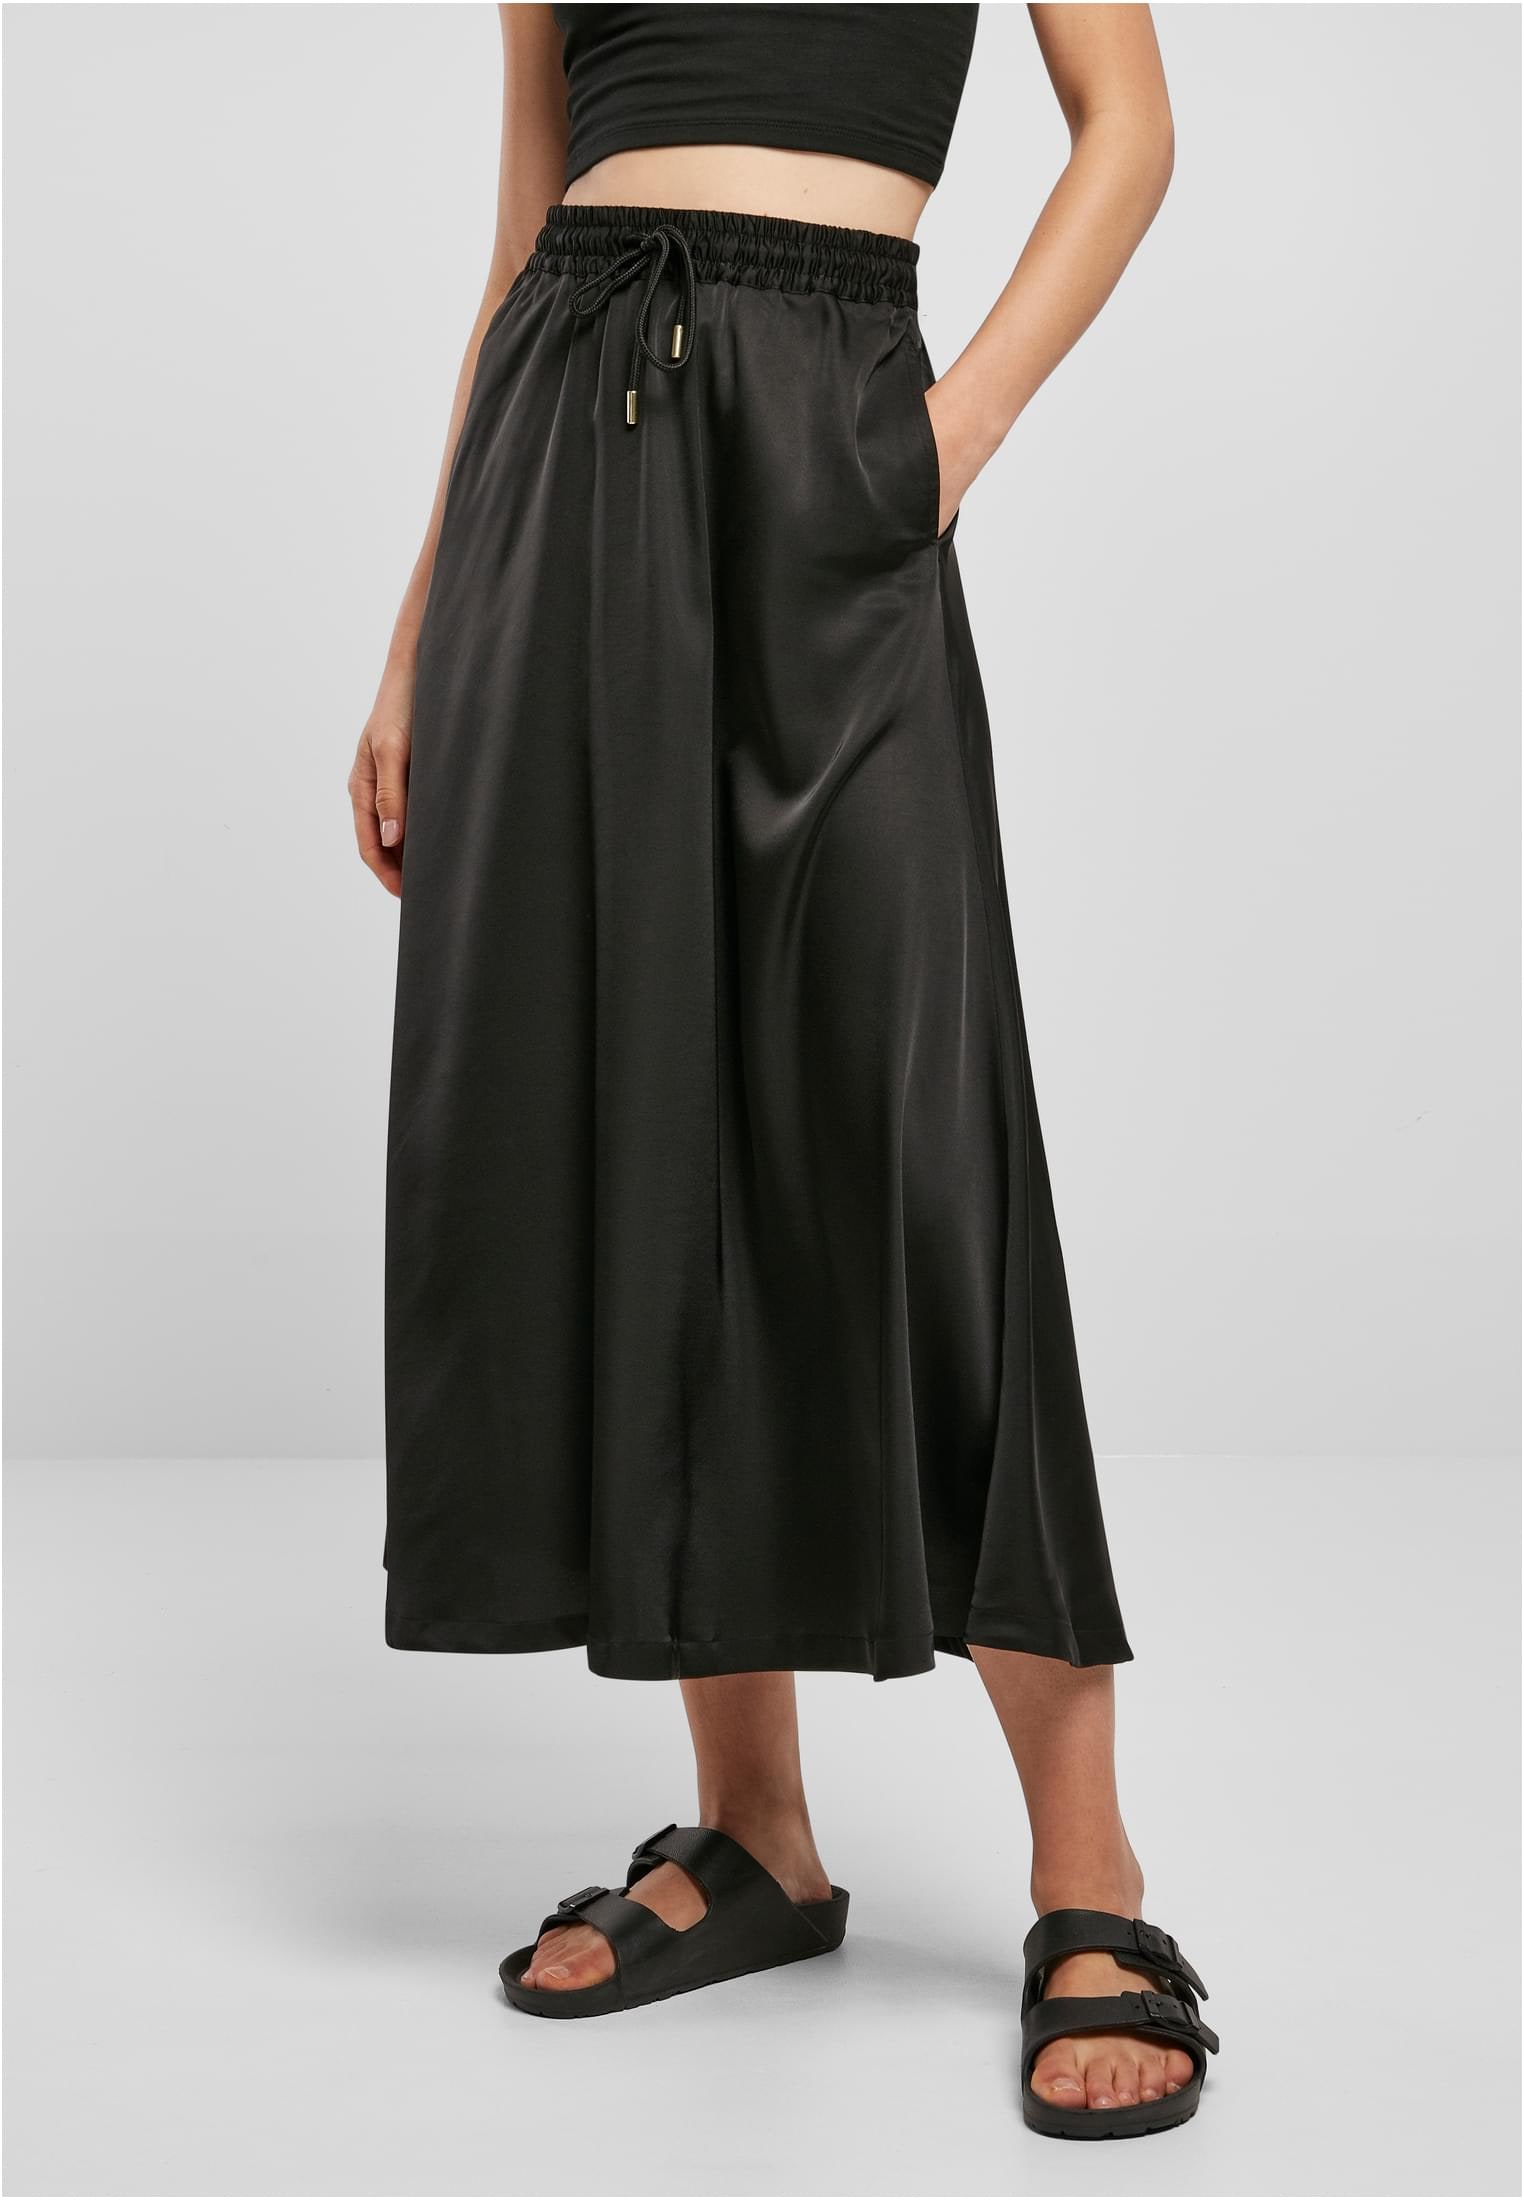 URBAN CLASSICS Jerseyrock Ladies BAUR | Skirt«, Midi (1 Satin tlg.) kaufen »Damen für